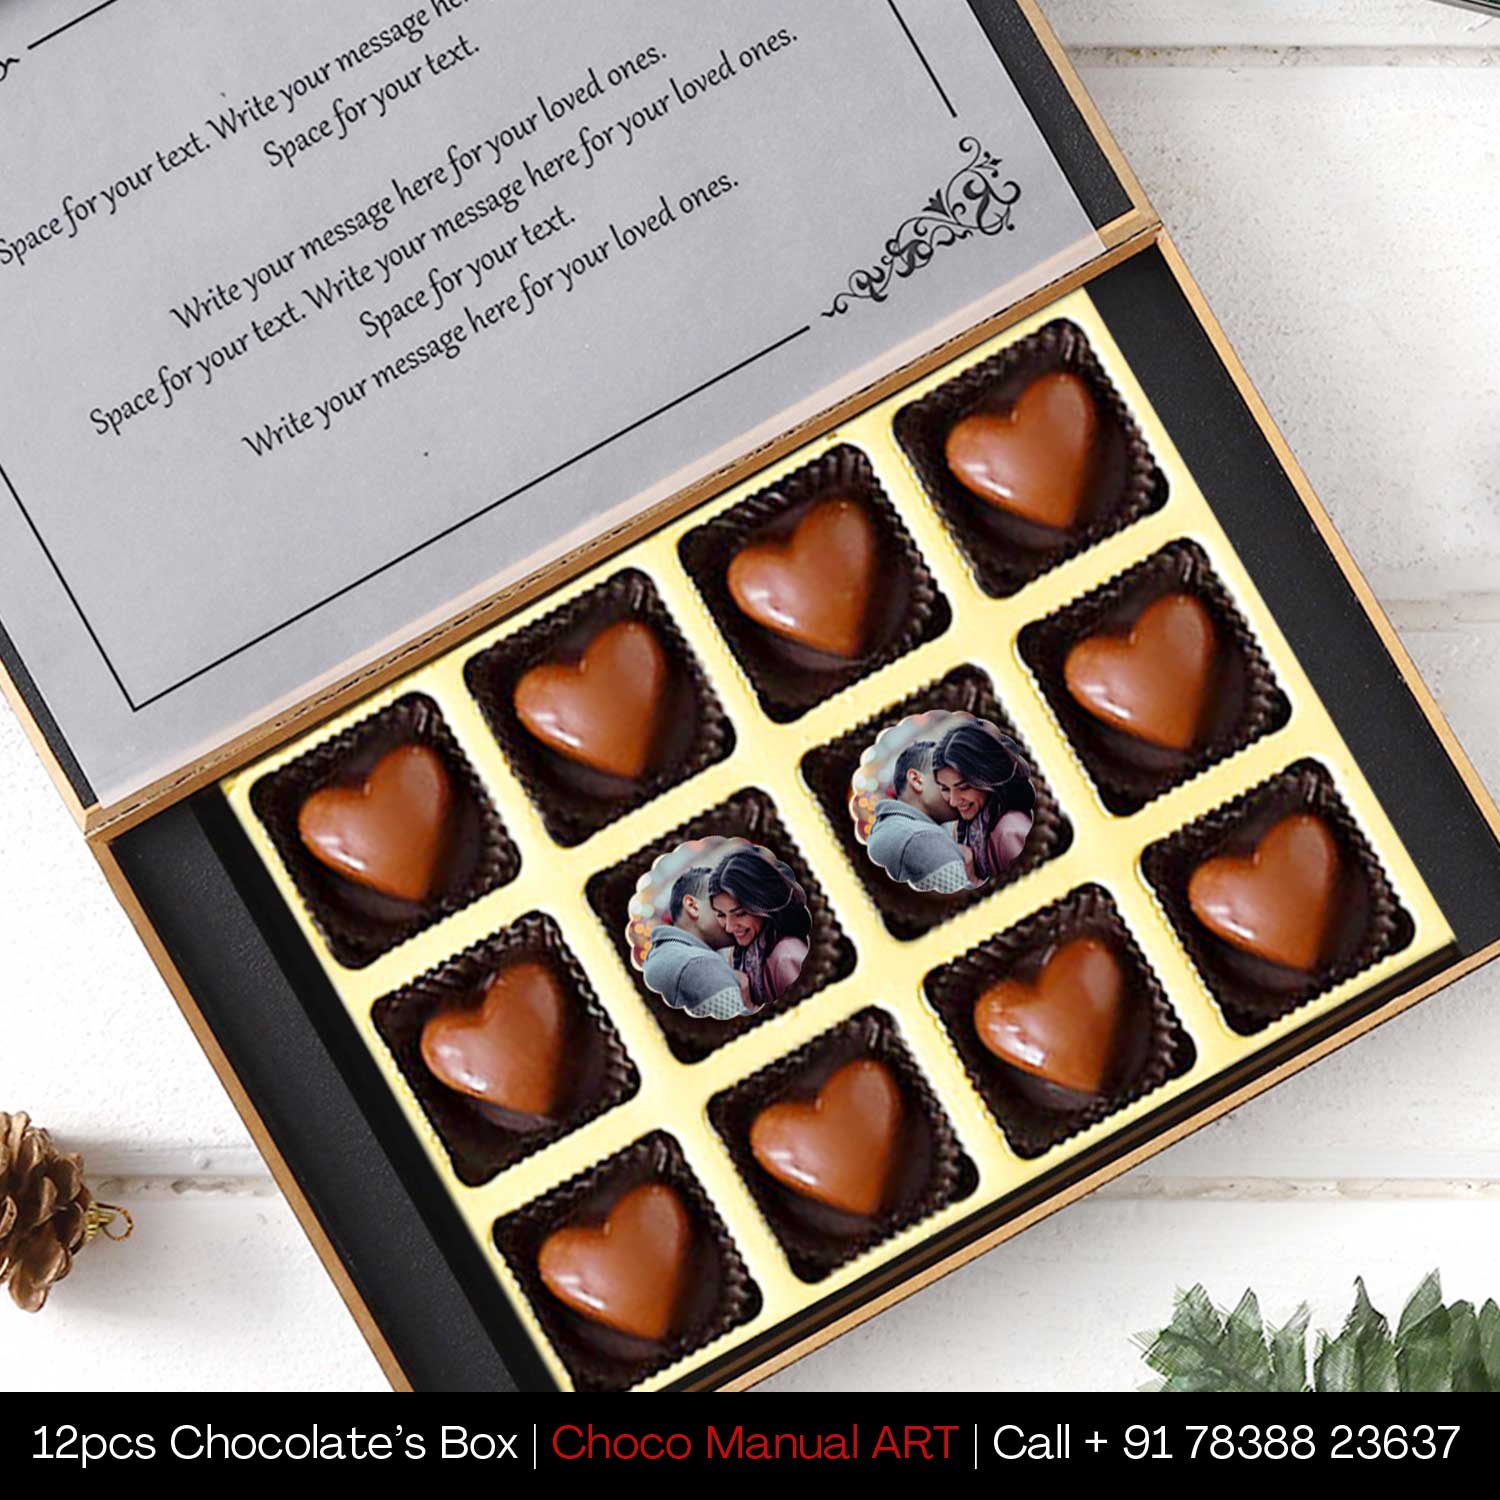 Kiss Day Unique Chocolate gift I Buy at Choco ManualART